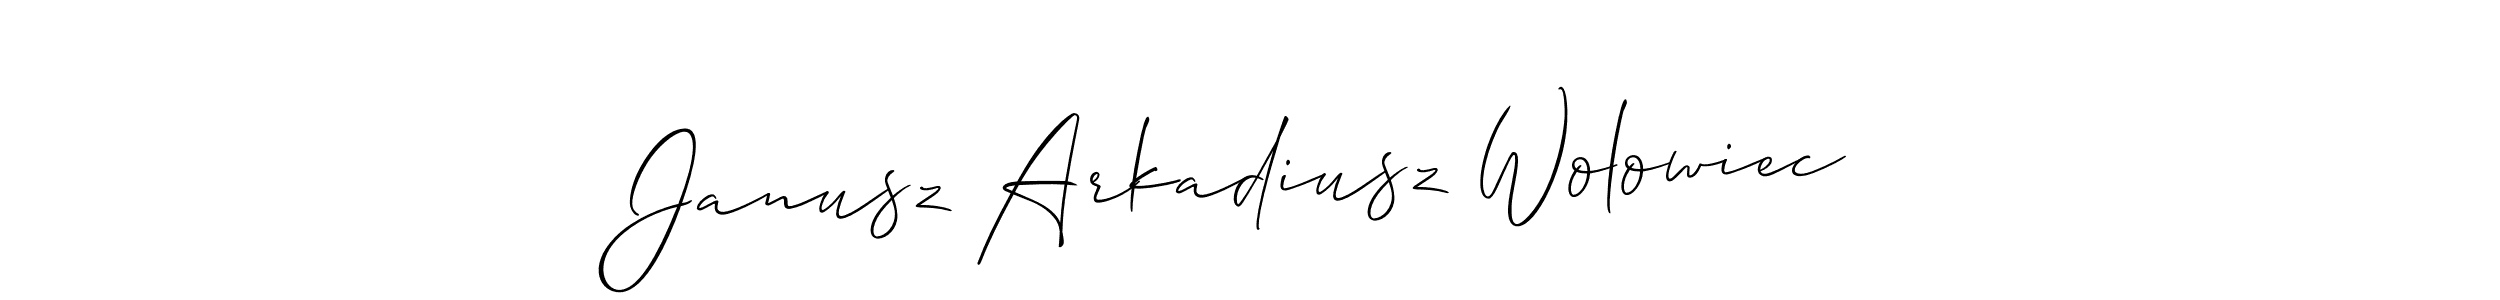 Janusz Arkadiusz Wolowiec stylish signature style. Best Handwritten Sign (Allison_Script) for my name. Handwritten Signature Collection Ideas for my name Janusz Arkadiusz Wolowiec. Janusz Arkadiusz Wolowiec signature style 2 images and pictures png